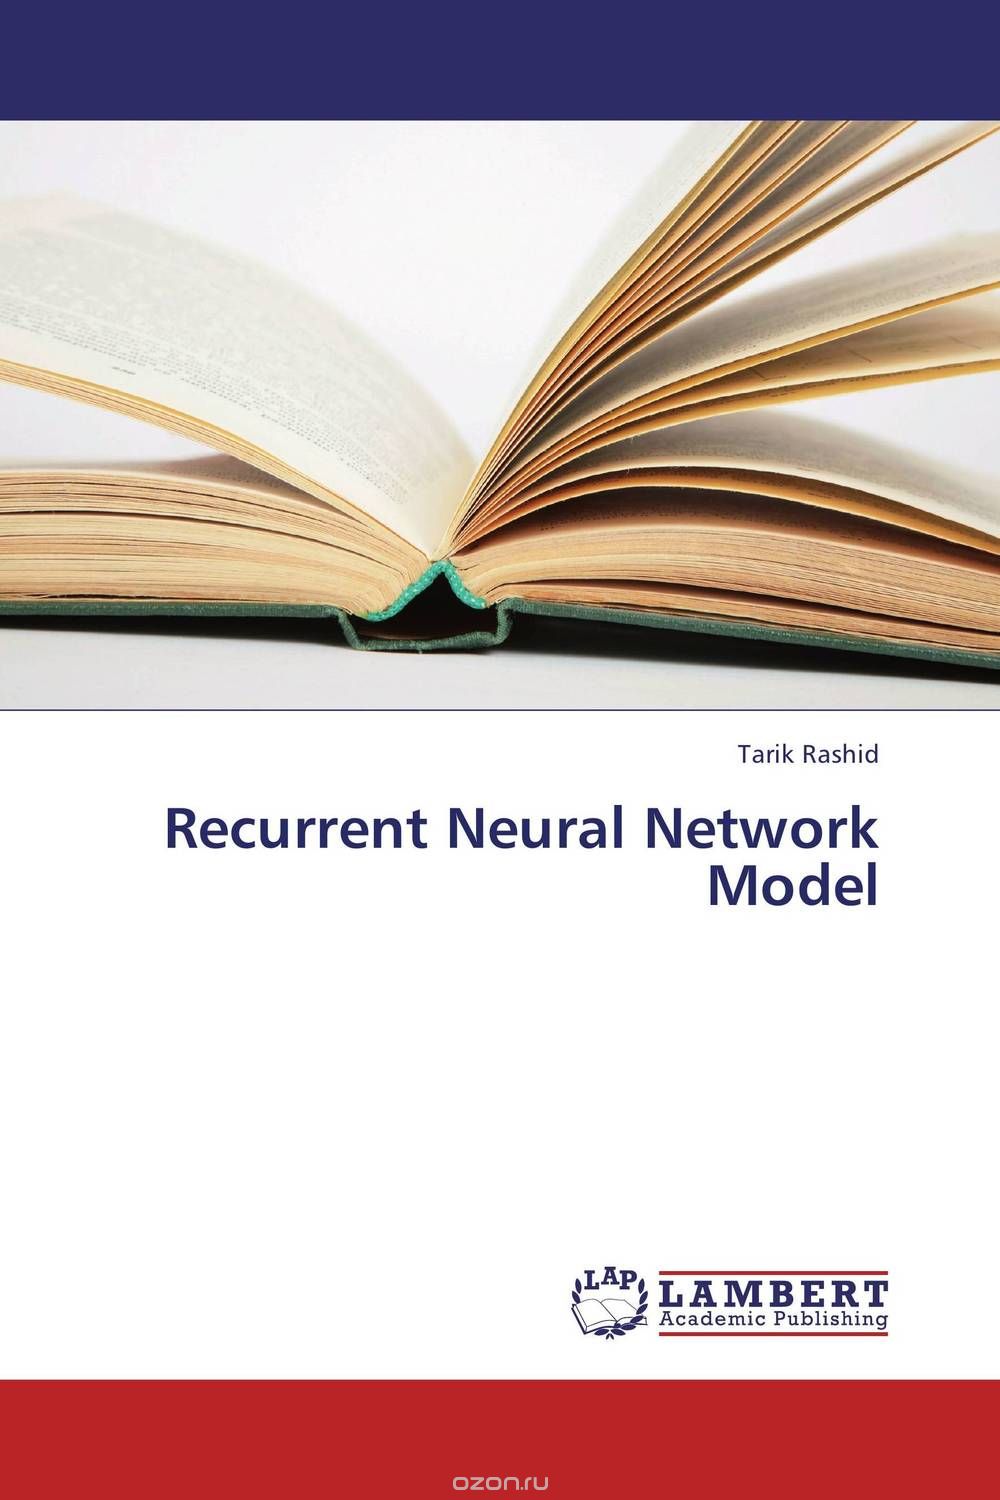 Скачать книгу "Recurrent Neural Network Model"